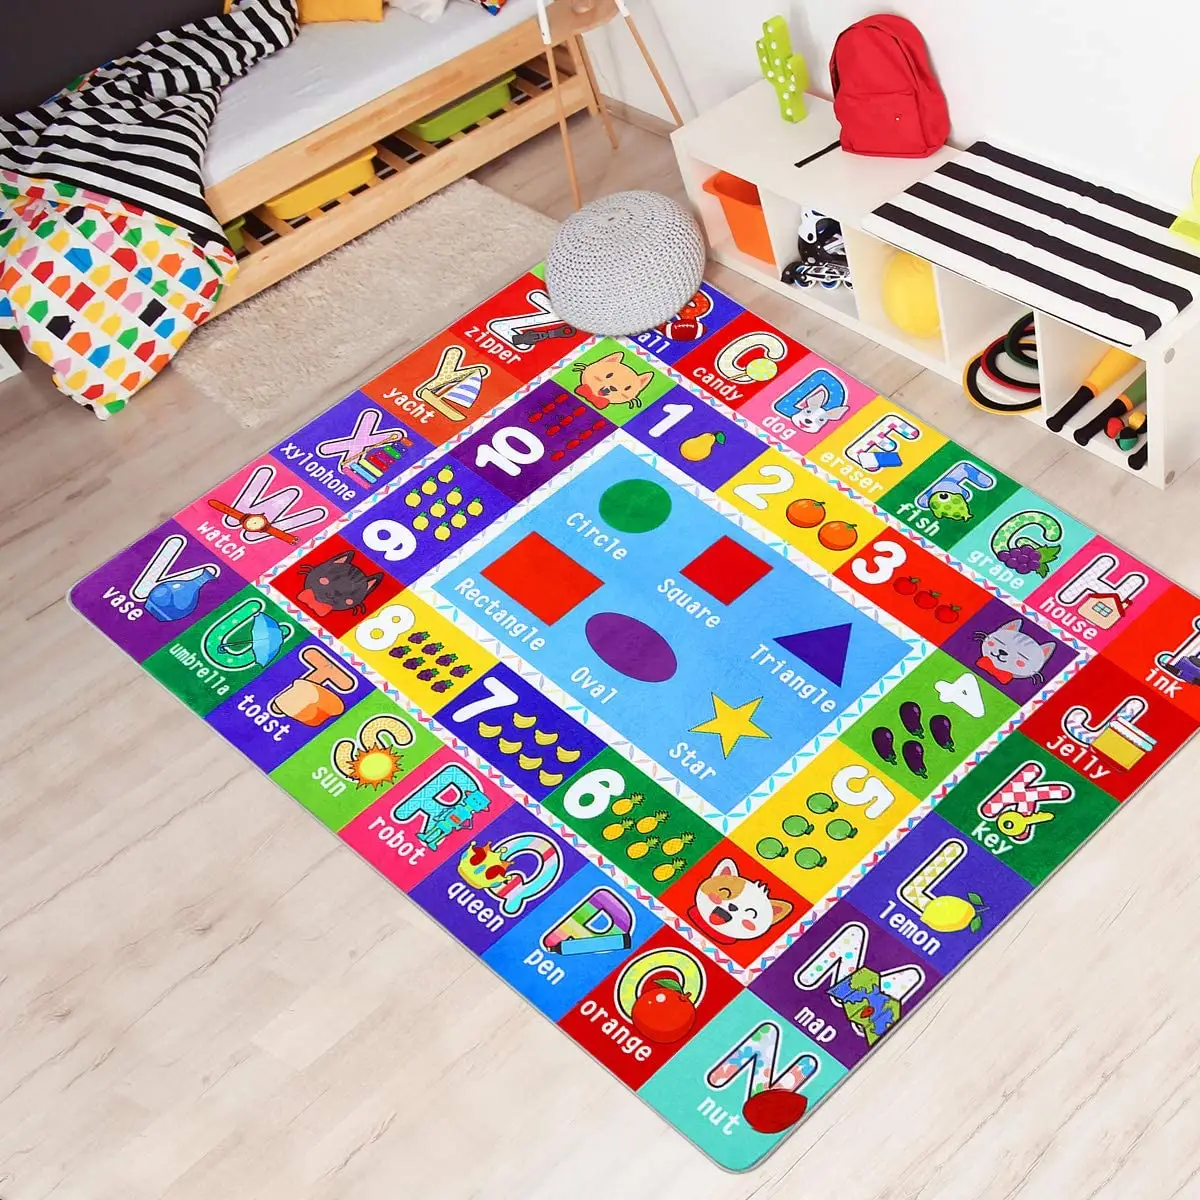 I bambini giocano tappeto camera dei bambini stuoia del gioco per bambini camera da letto tappeto rotondo alfabeto tappeto stuoia del gioco del bambino